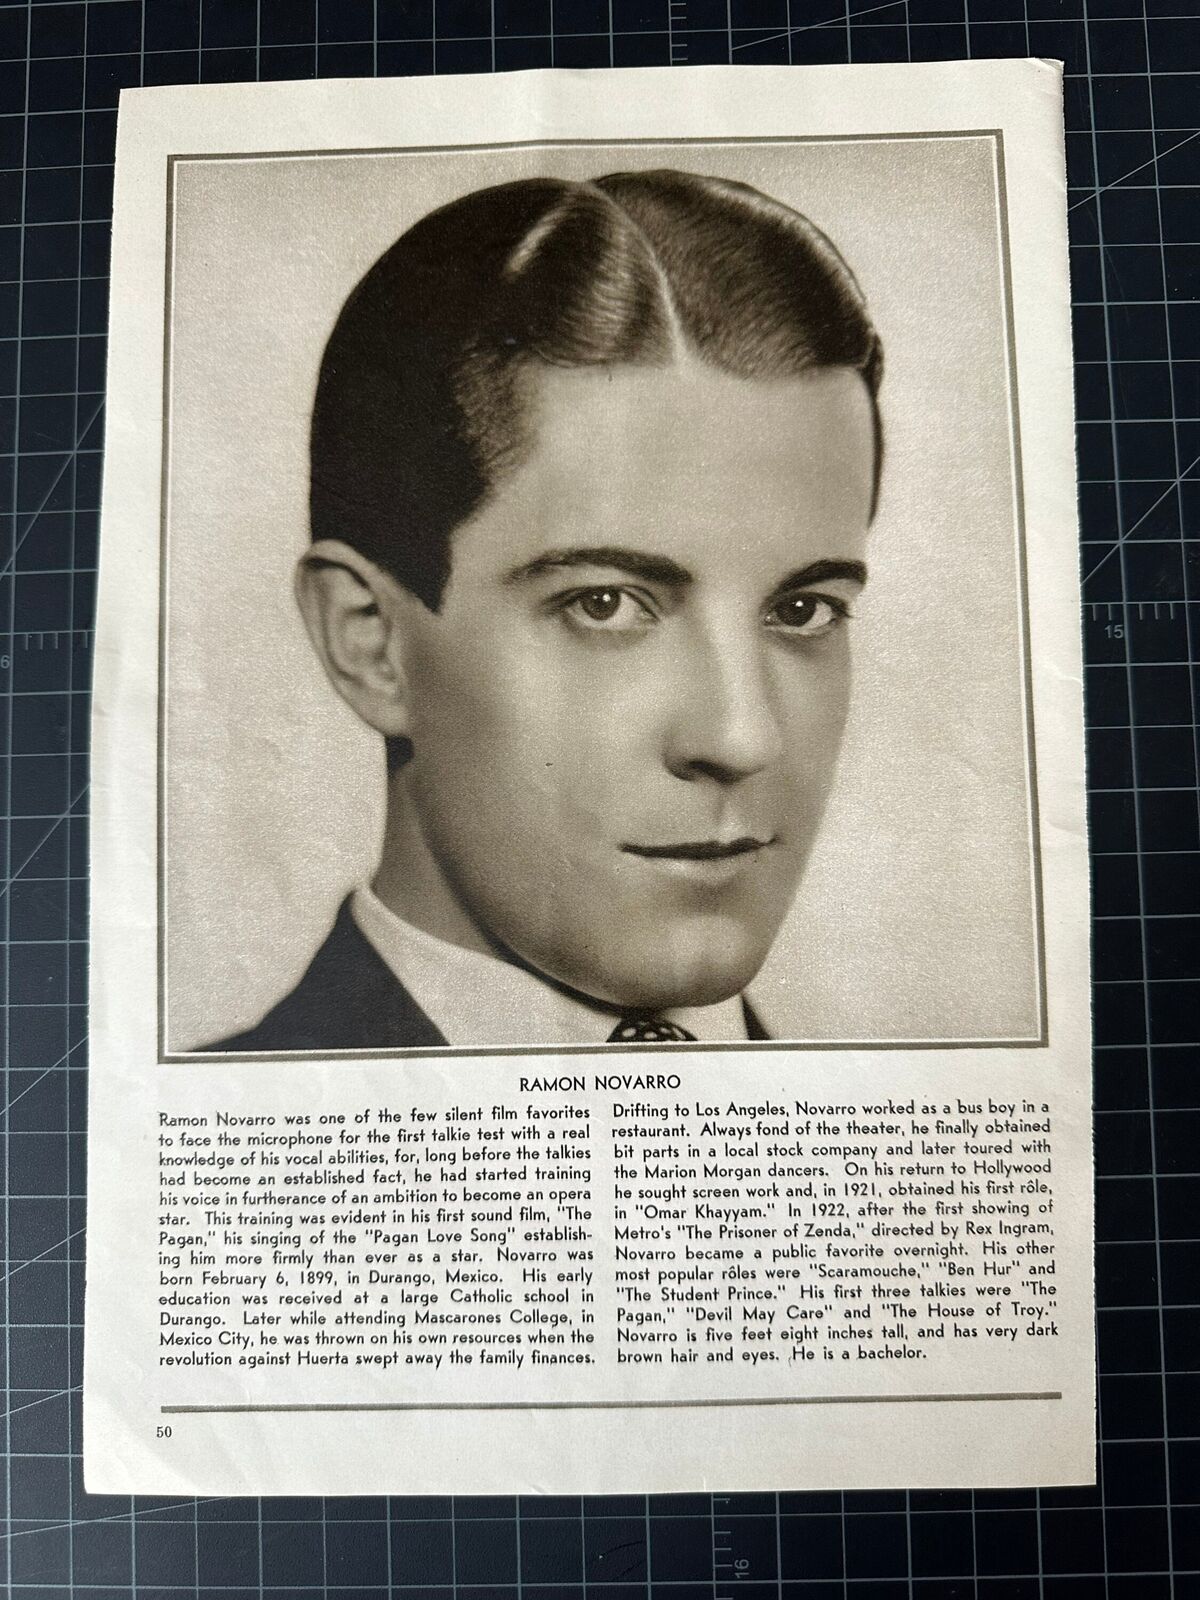 Vintage 1930 Ramon Novarro Portrait - Vintage Hollywood Actor